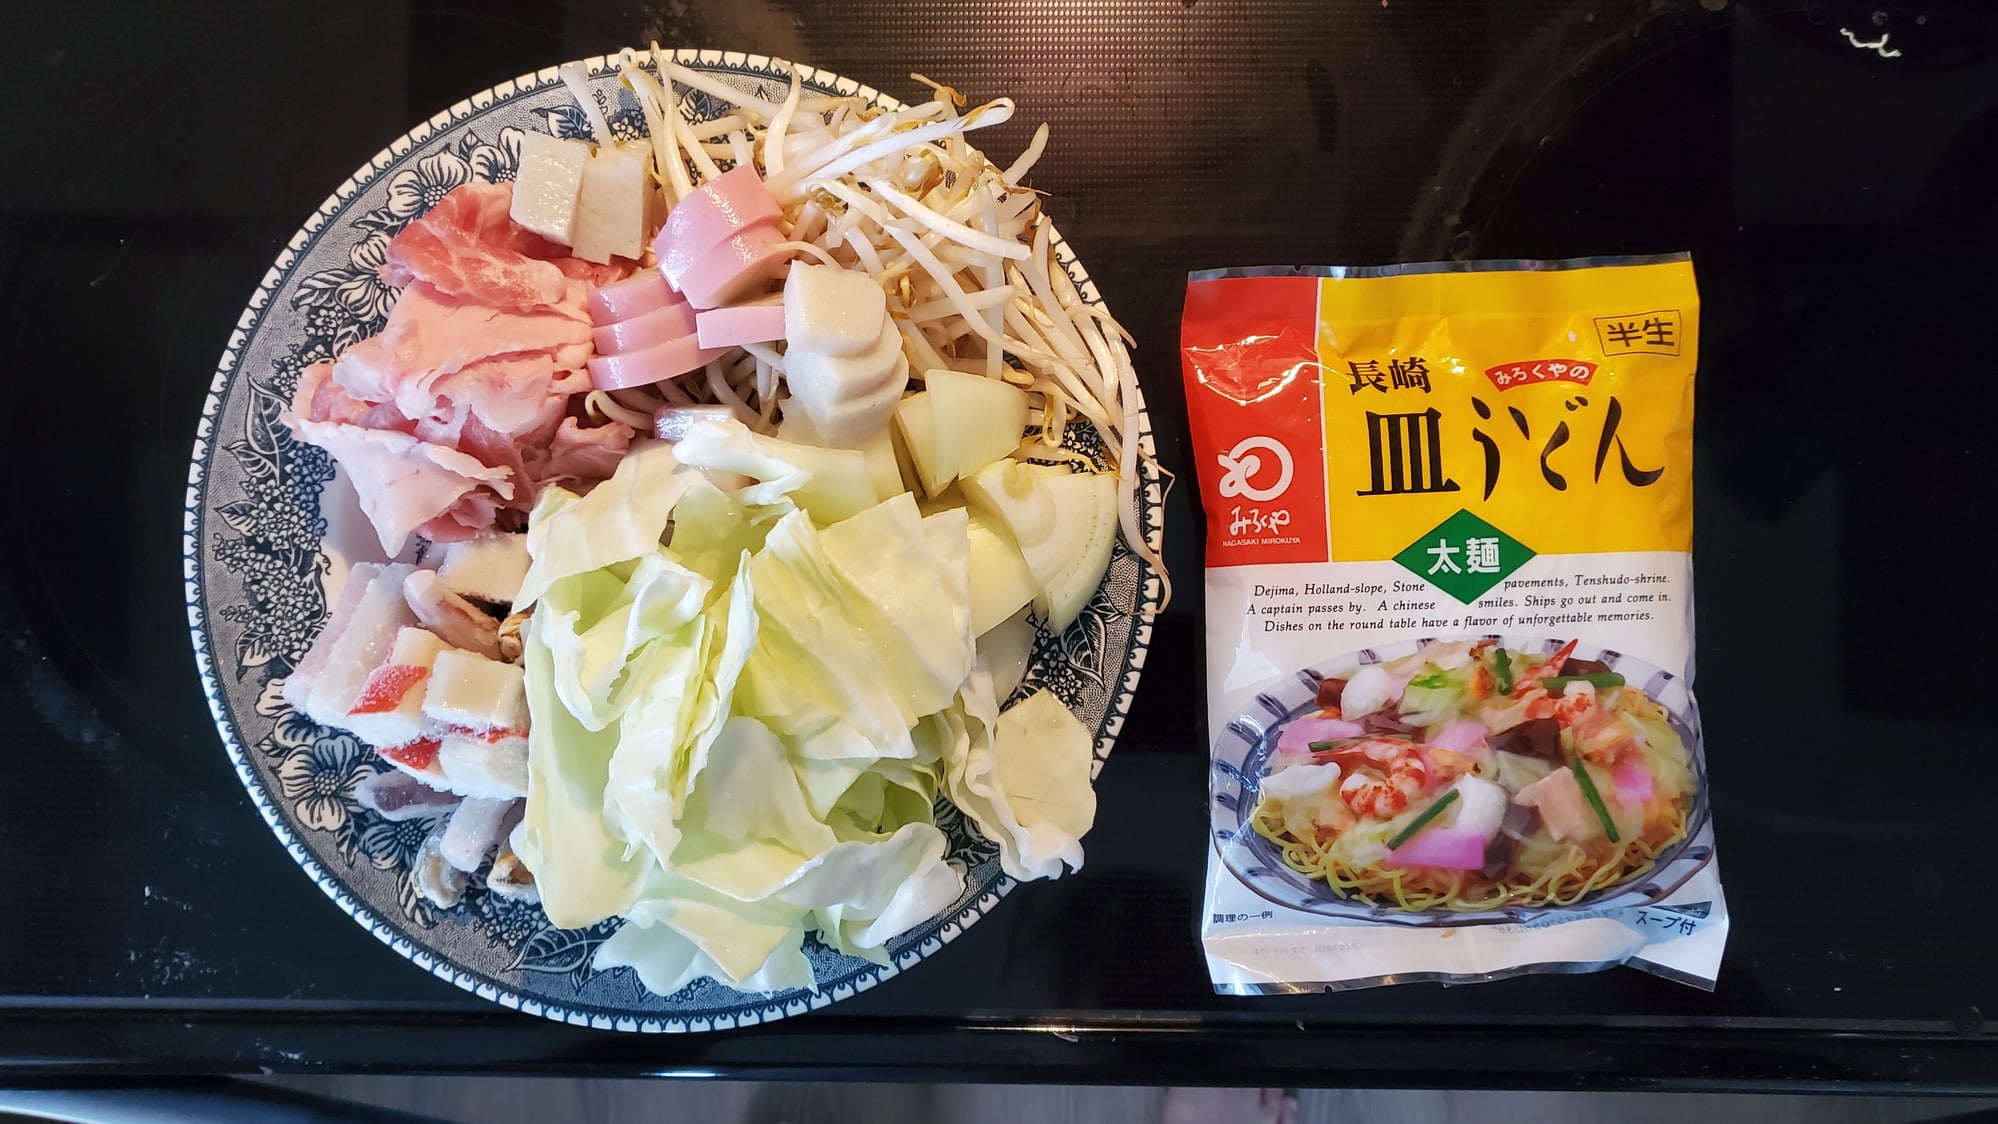 Frozen Chopped Green Onions Recipe by cookpad.japan - Cookpad